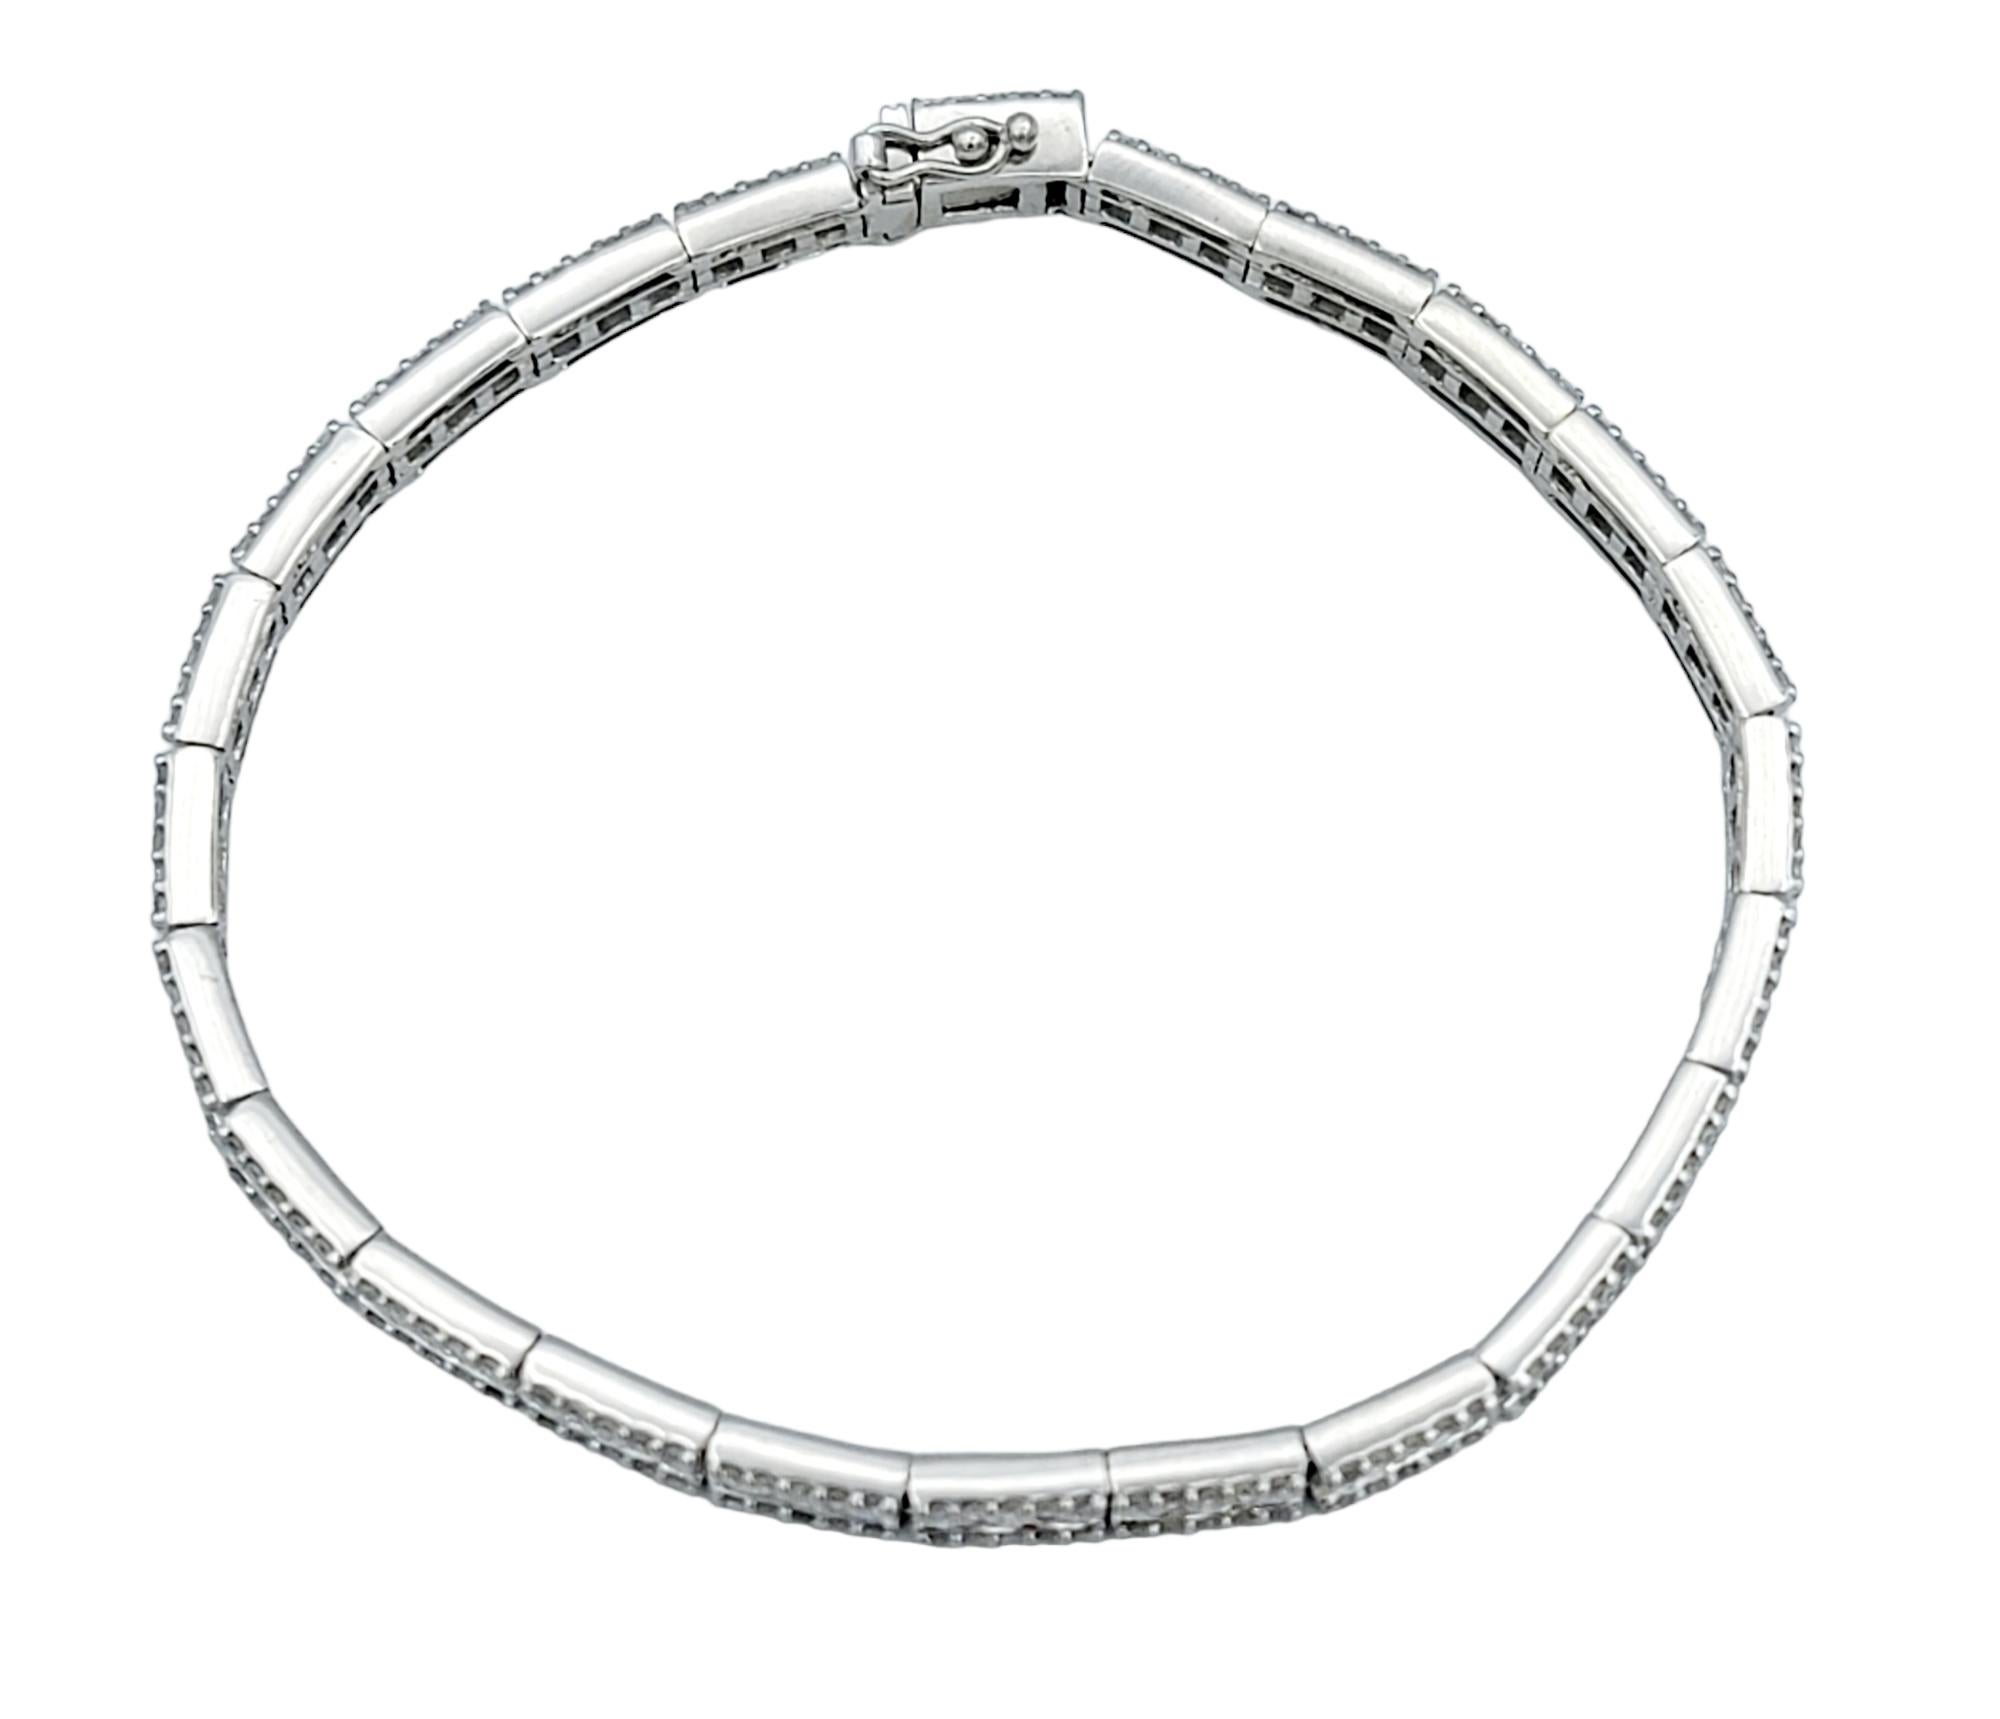 4.32 Carat Total Three Row Diamond Link Tennis Bracelet in 14 Karat White Gold  For Sale 1